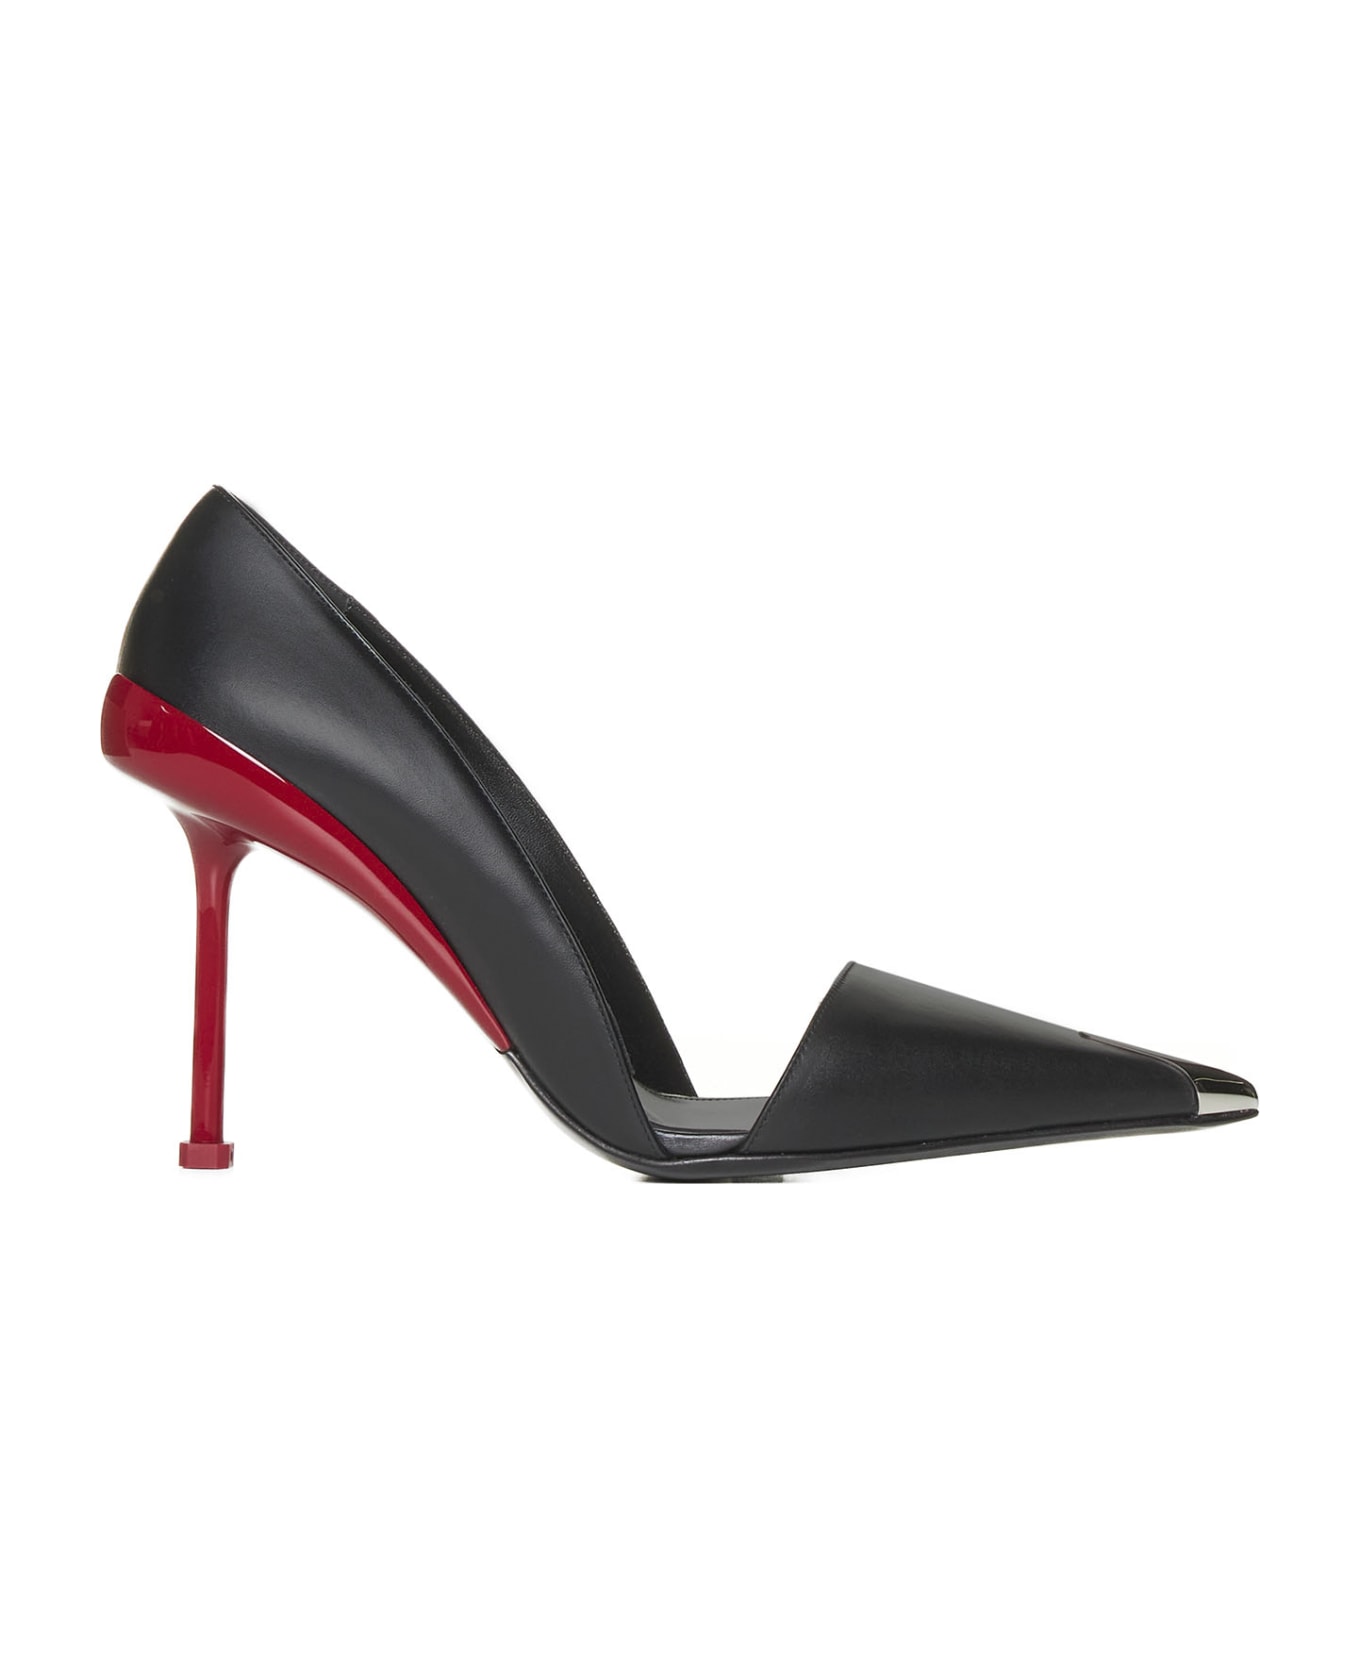 Alexander McQueen High-heeled Shoe - Black/Skool red/silv